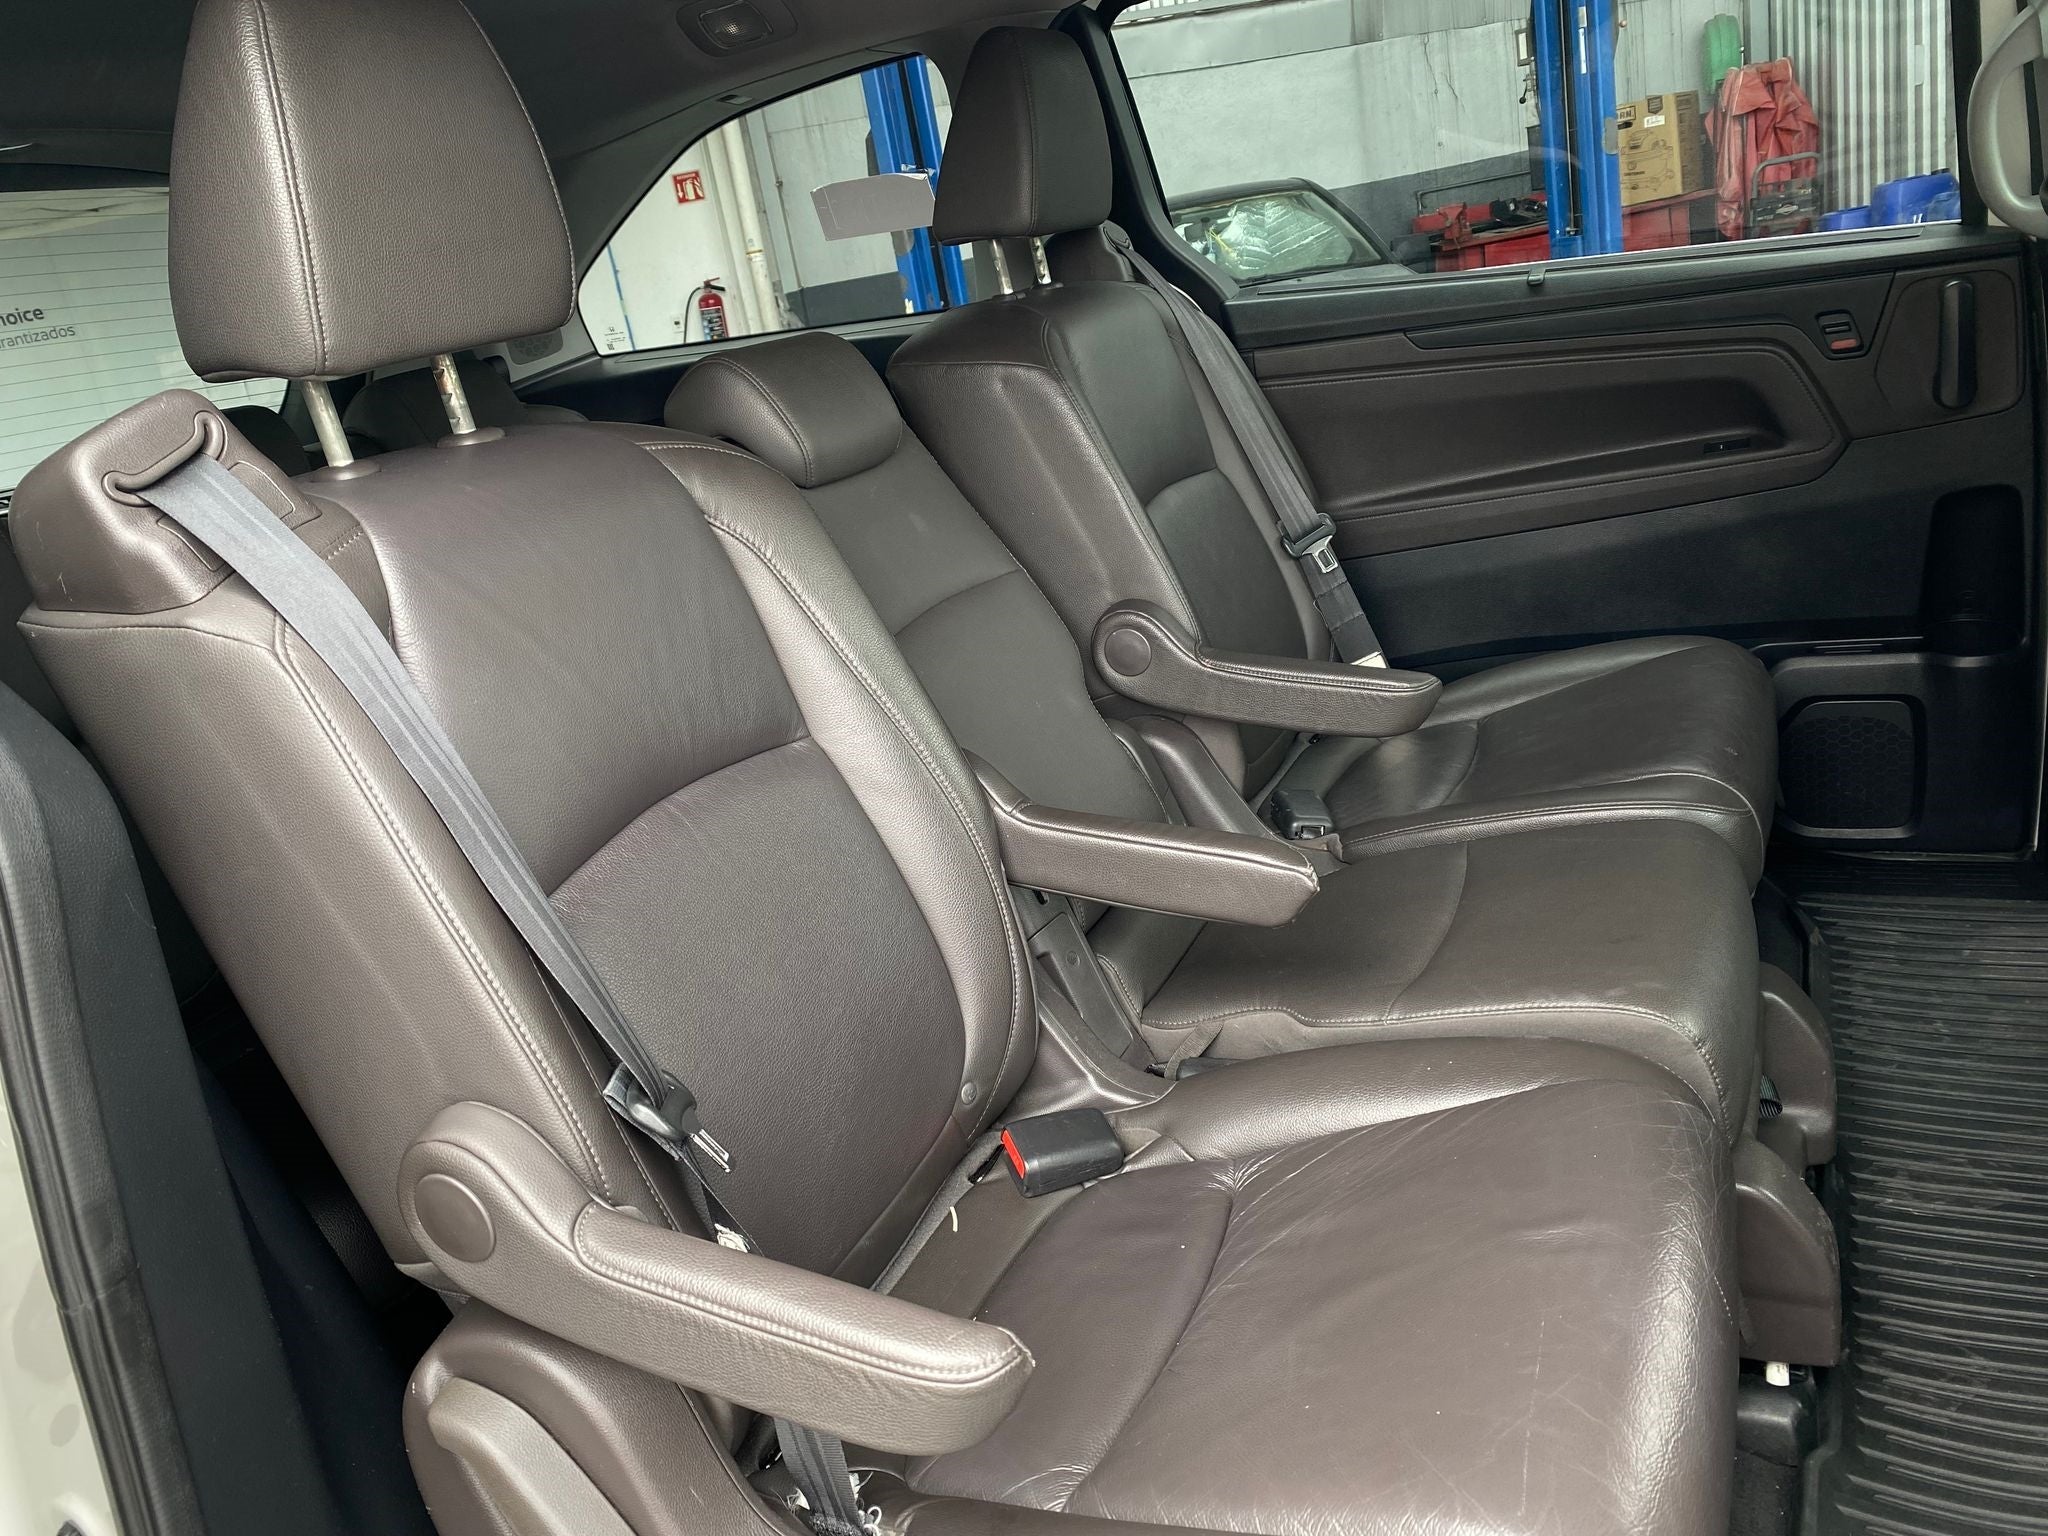 2018 Honda Odyssey 3.5 Touring At